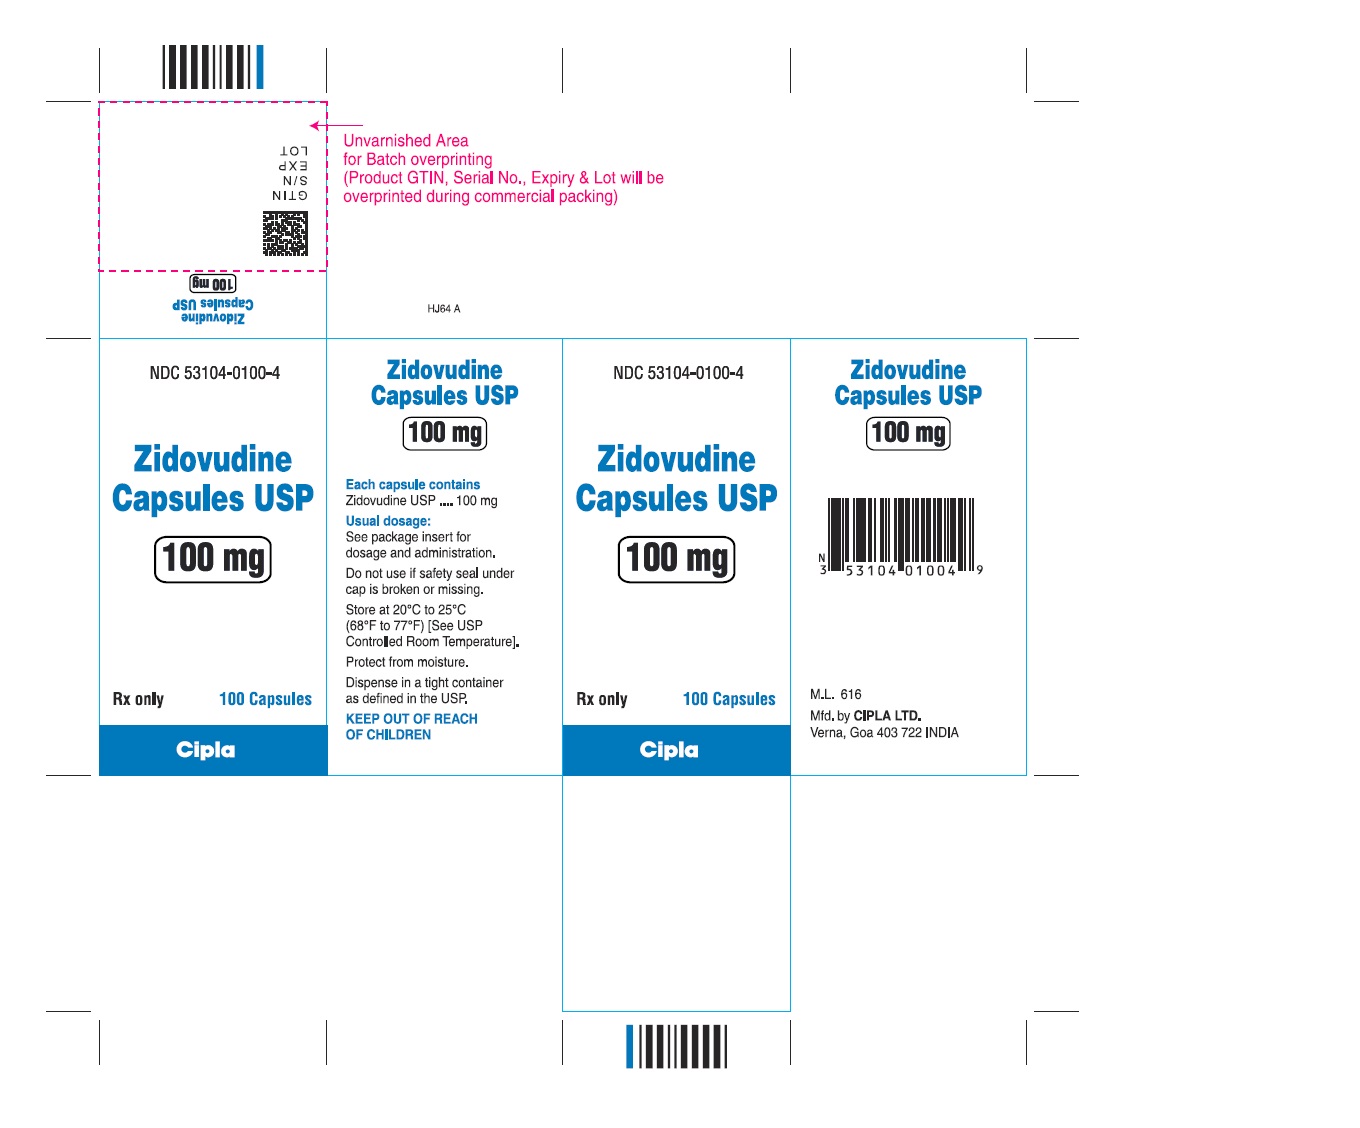 zidovudine capsules USP 100 mg - 100s count bottle label